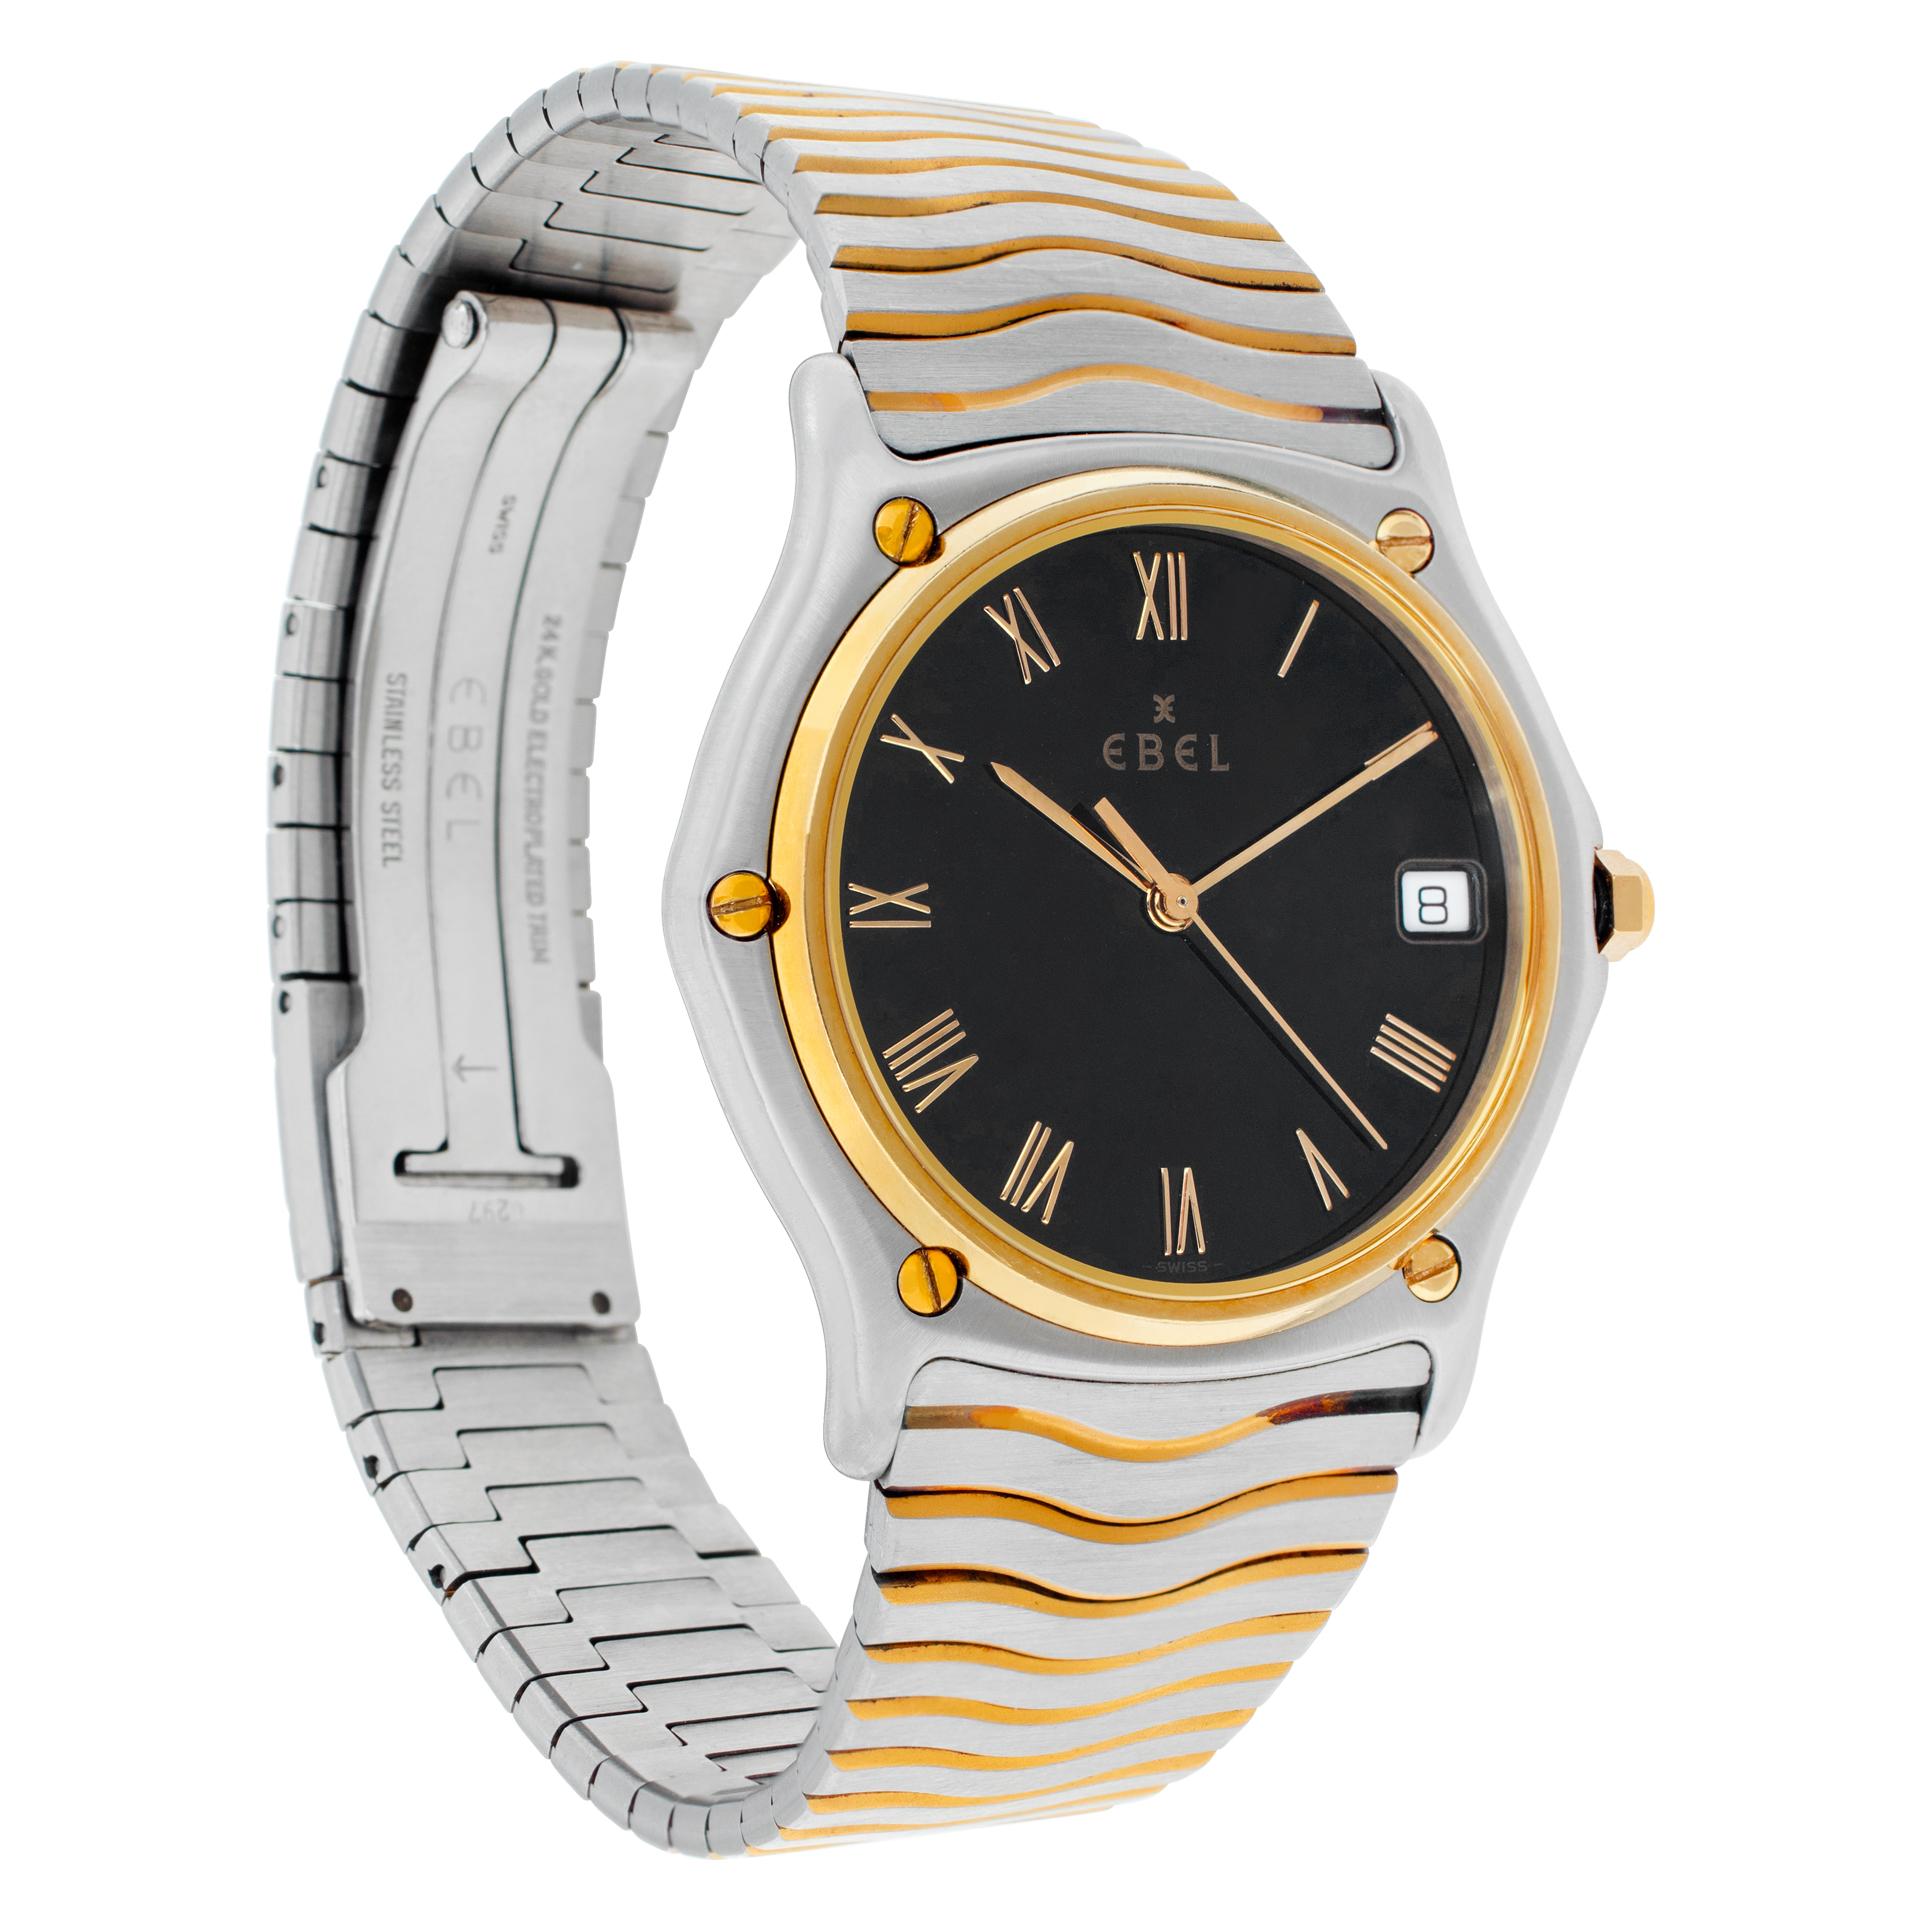 Ebel Sportwave 18k & stainless steel Quartz Wristwatch In Excellent Condition For Sale In Surfside, FL